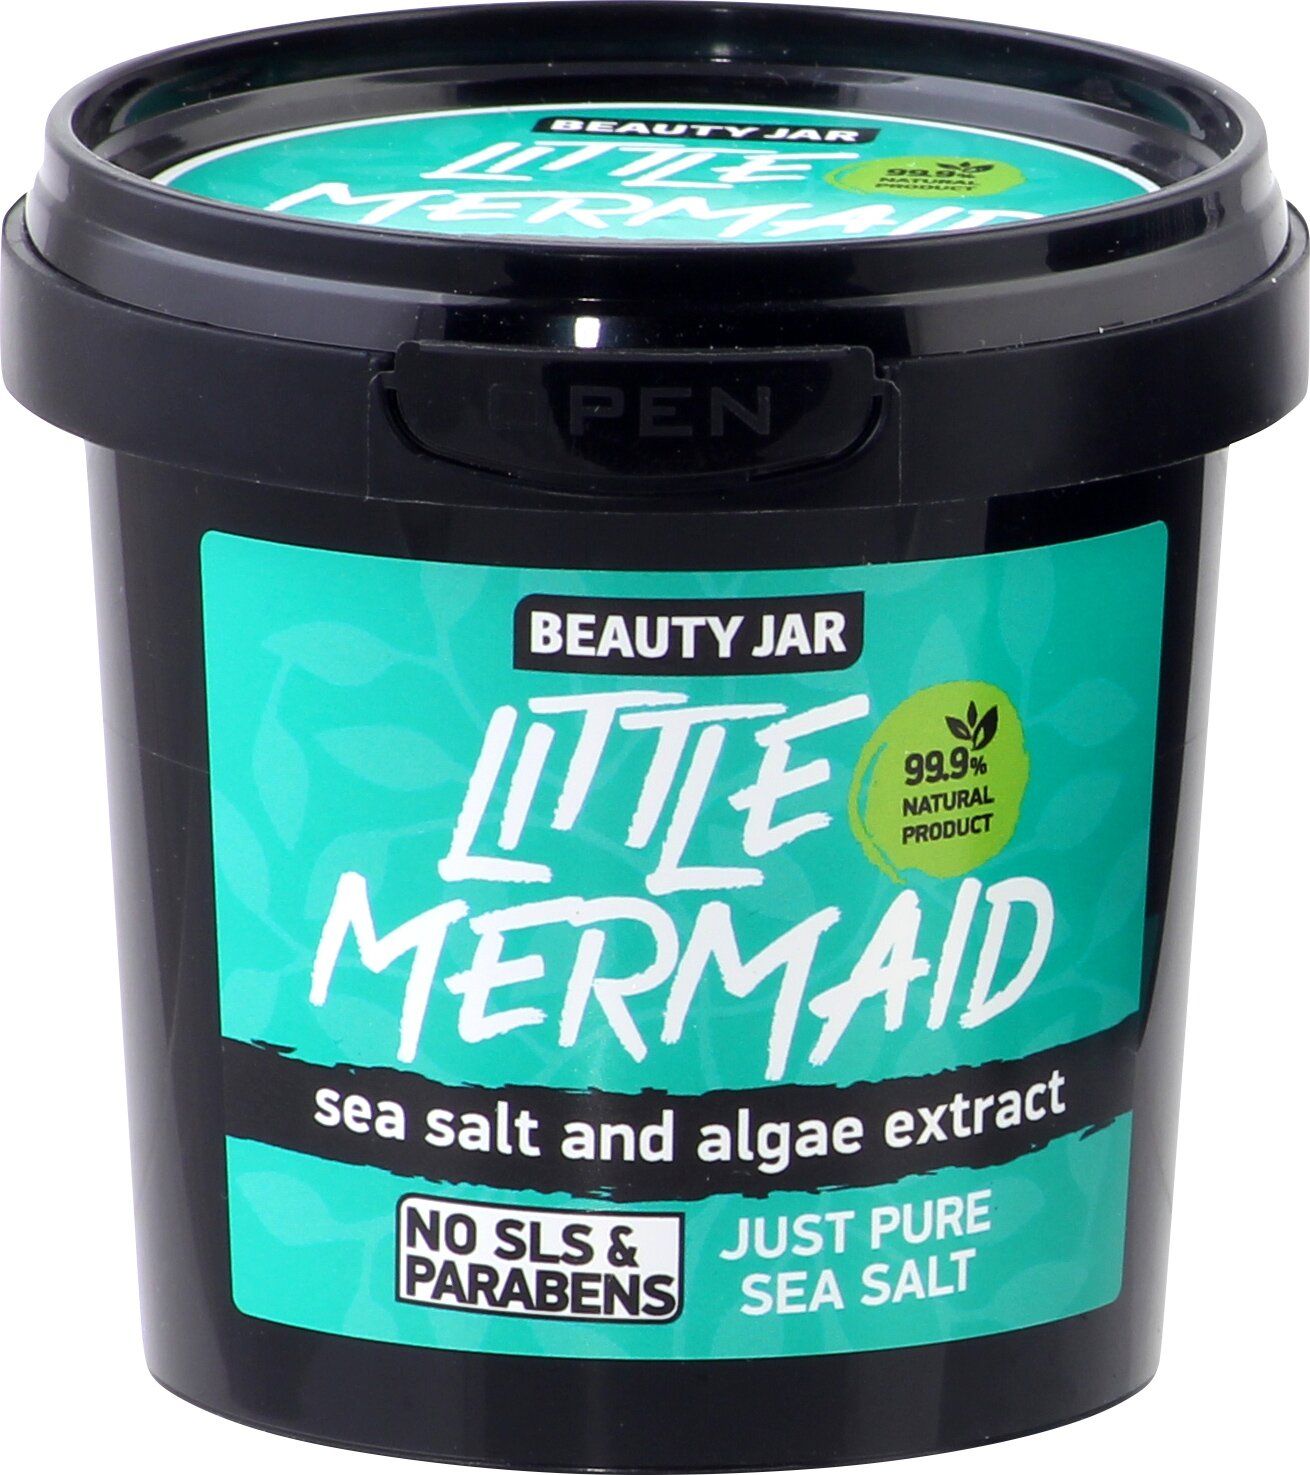 Beauty Jar Пенистая соль для ванны "Little Mermaid" 200гр